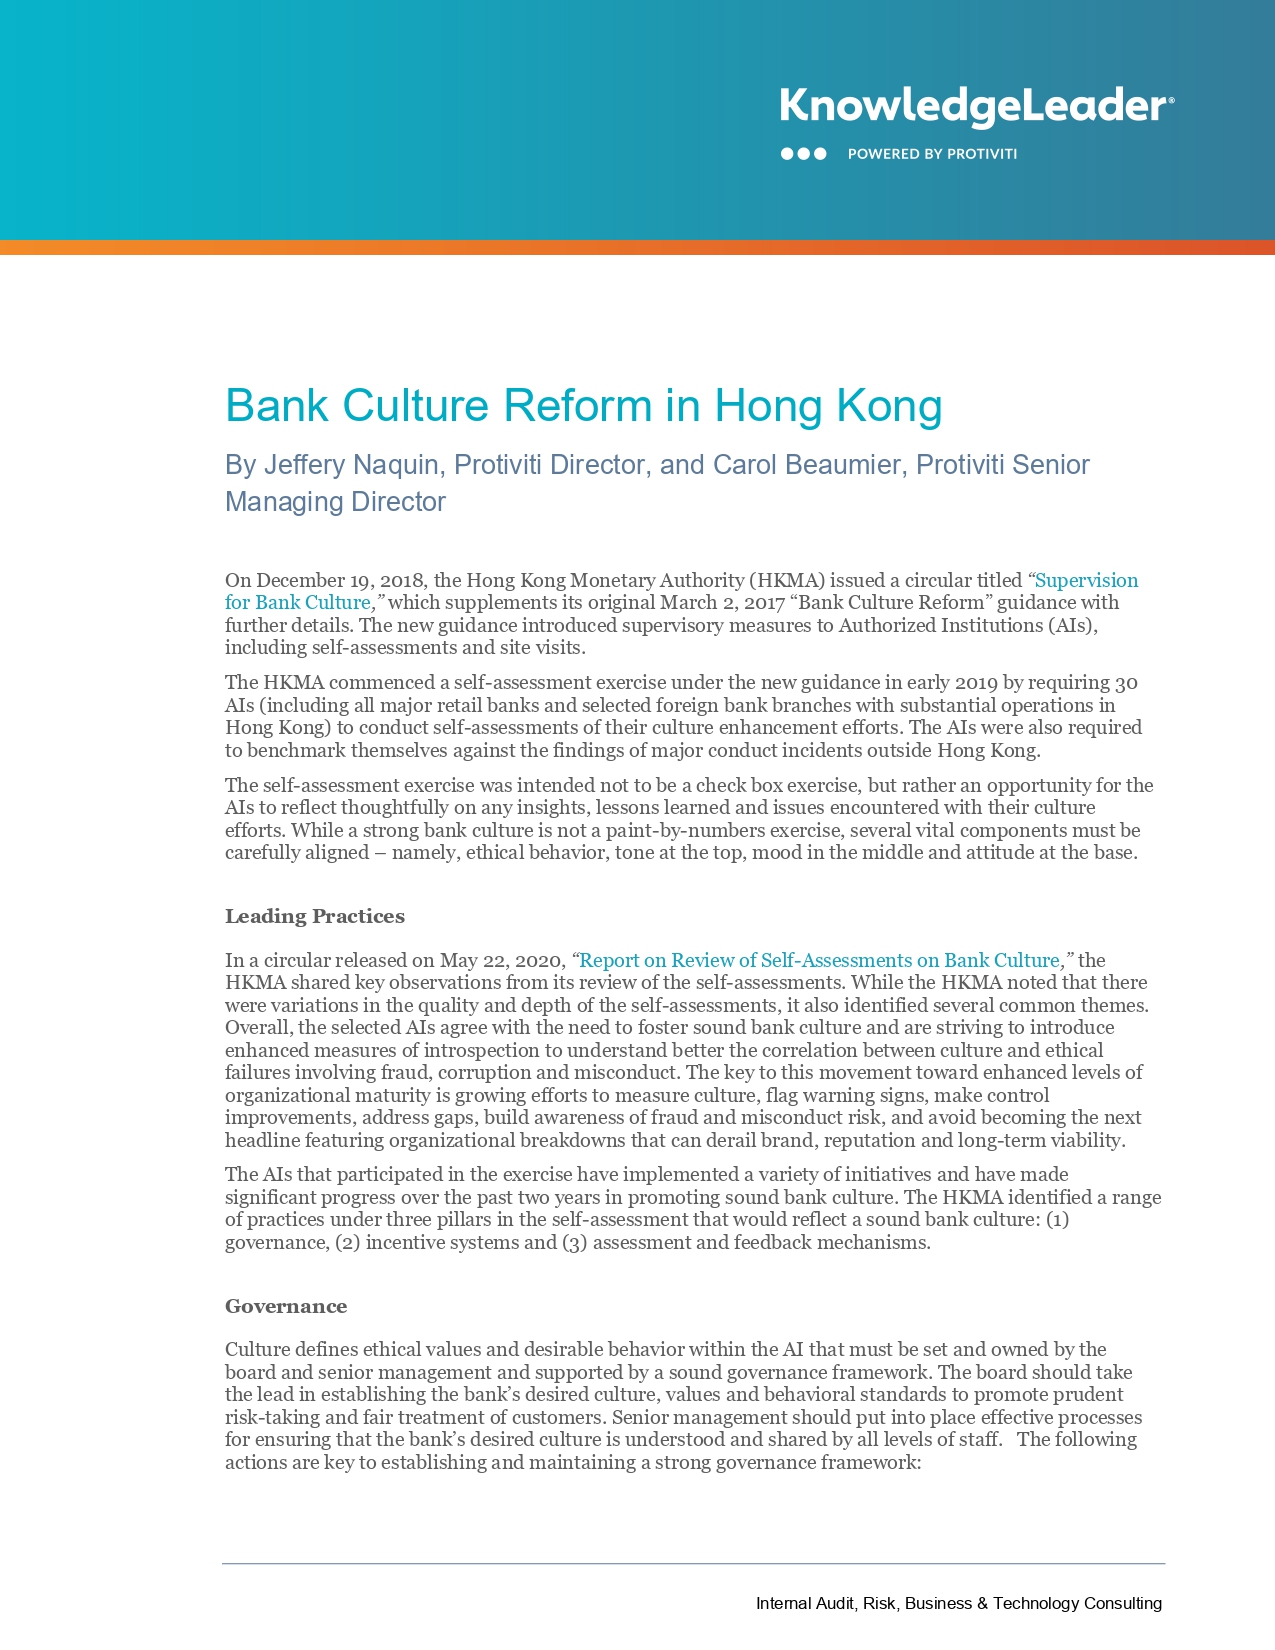 Bank Culture Reform in Hong Kong